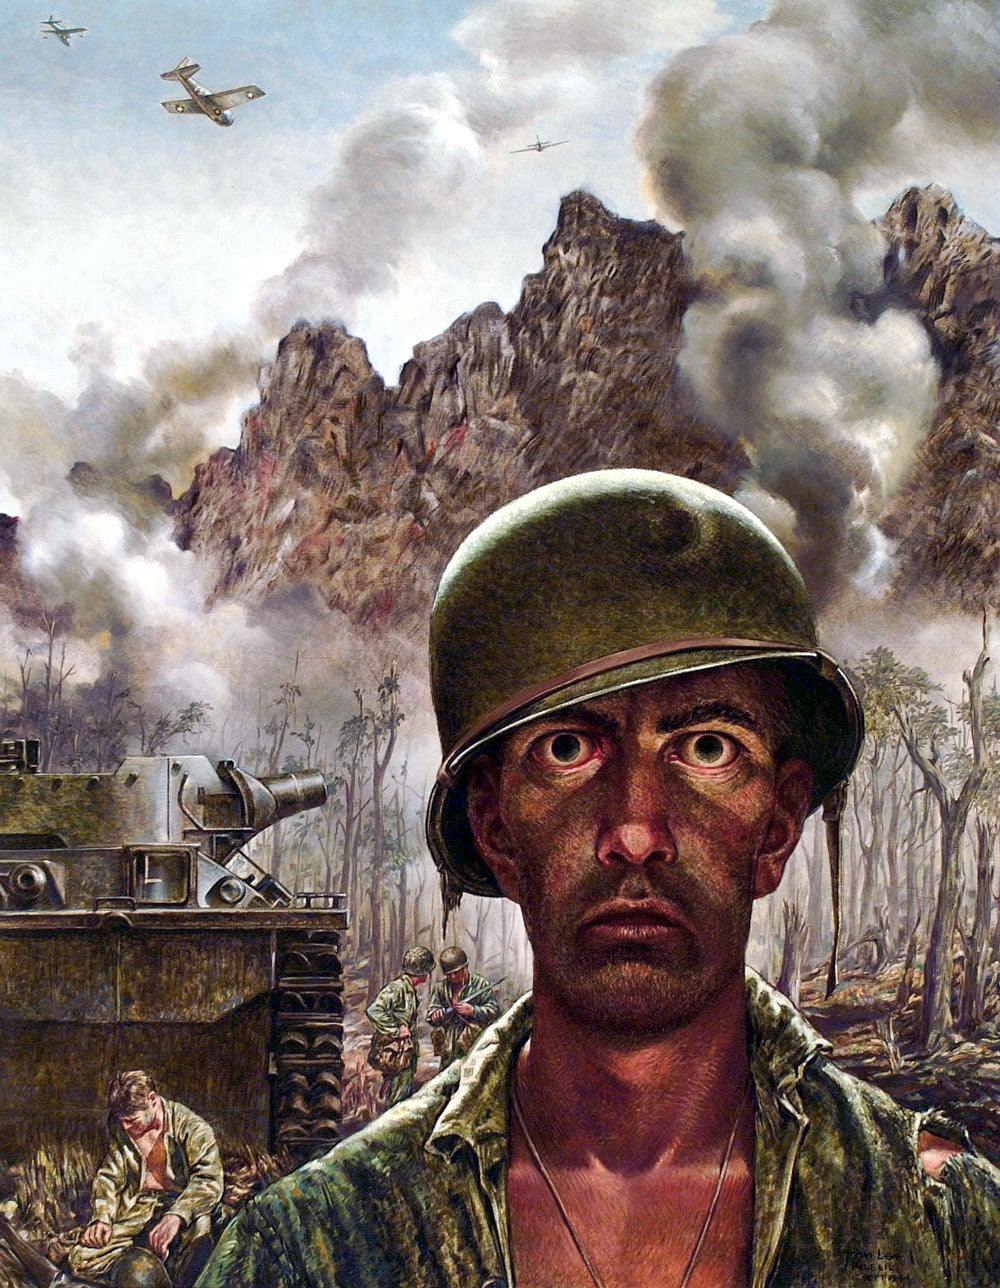 Art of war: How a few good illustrators capture the heroism of today’s Marines